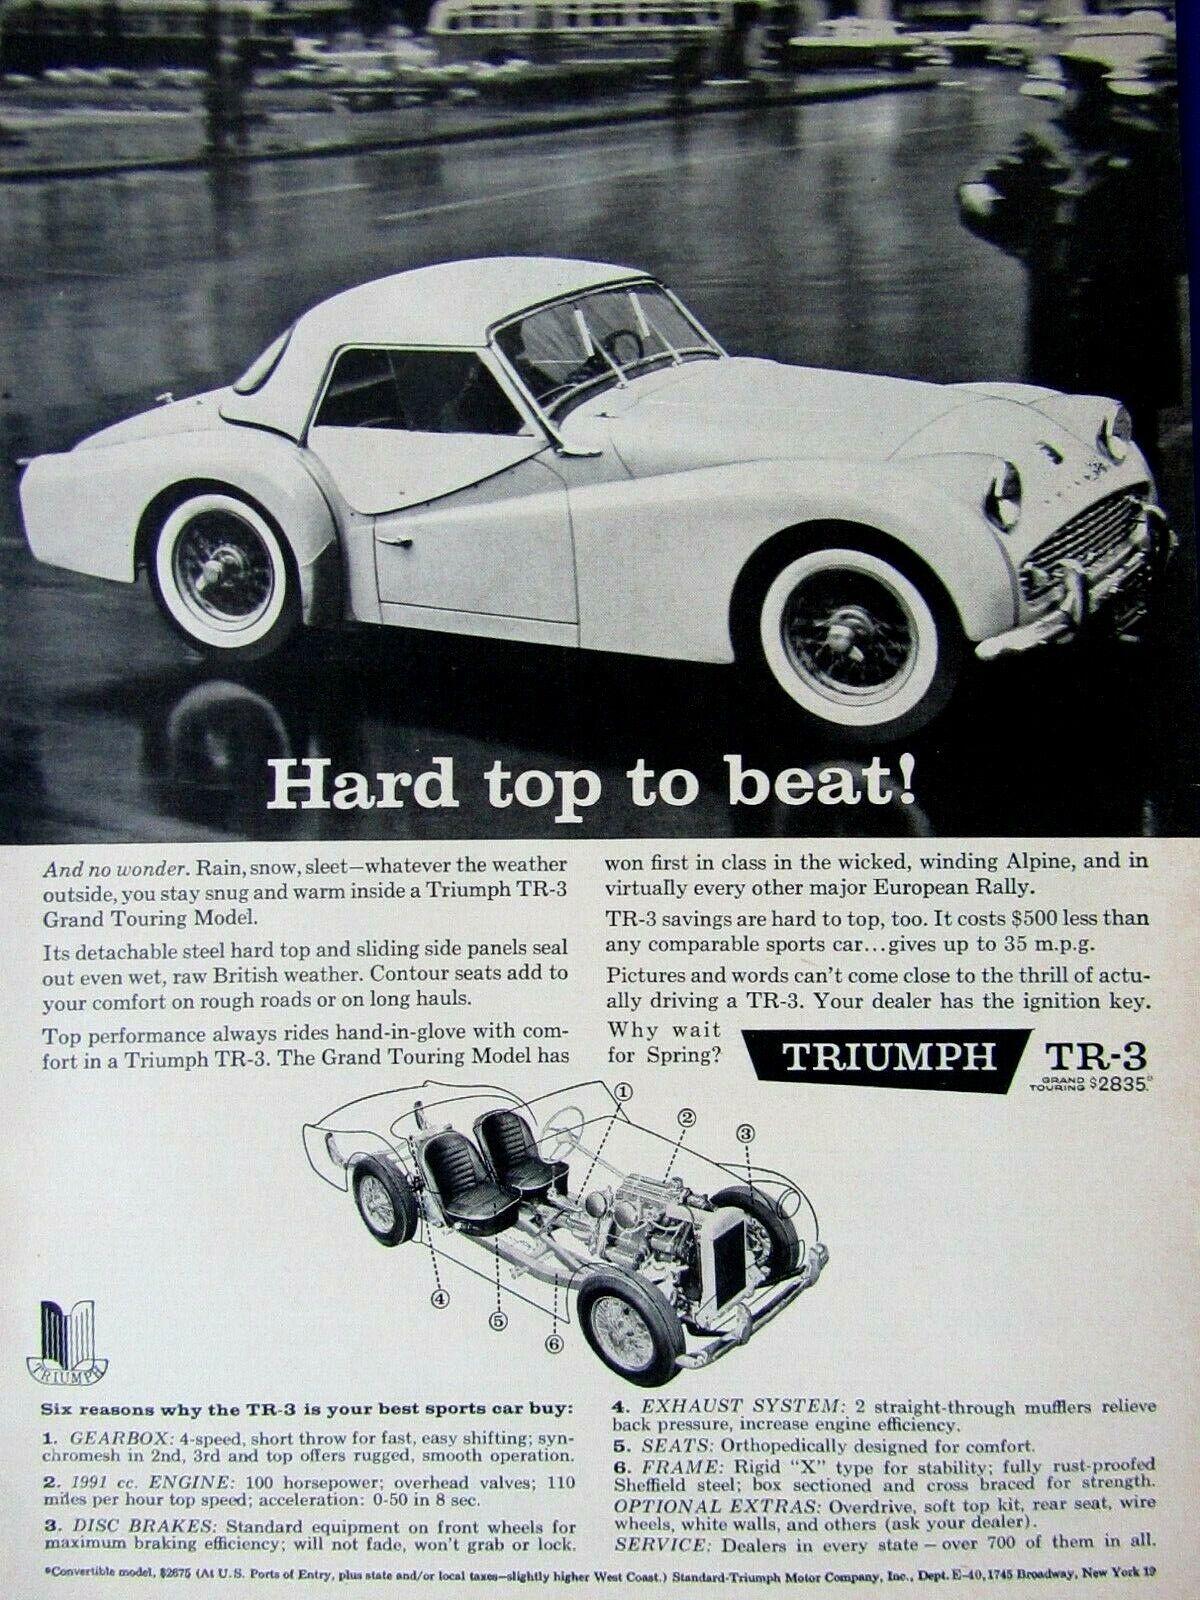 1960 Triumph Tr 3 Vintage Cop In Rain Original Print Ad 8.5 X 11"